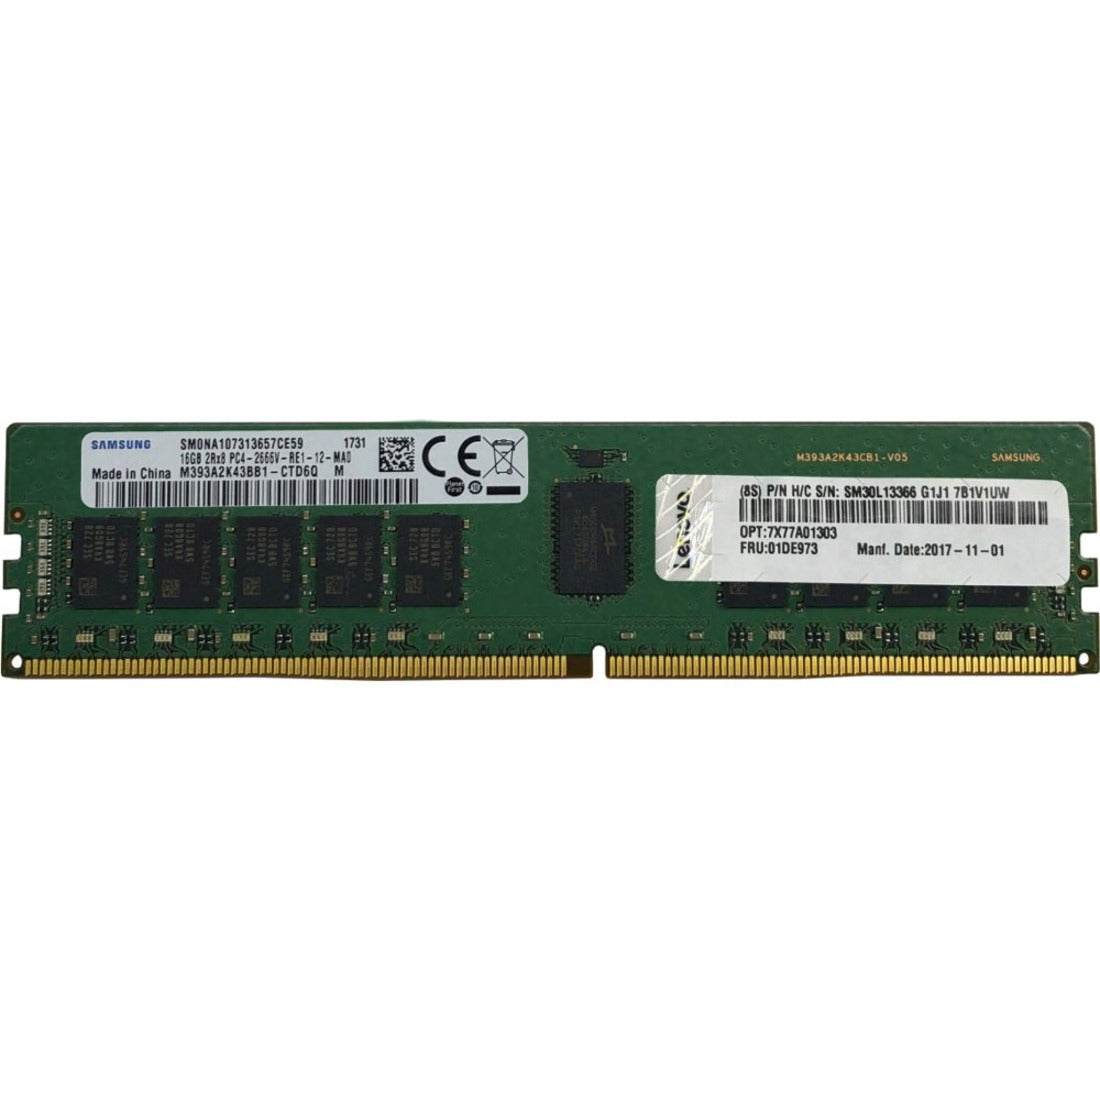 Lenovo 4ZC7A08708 16GB TruDDR4 Memory Module, High Performance RAM for Lenovo ThinkSystem Servers